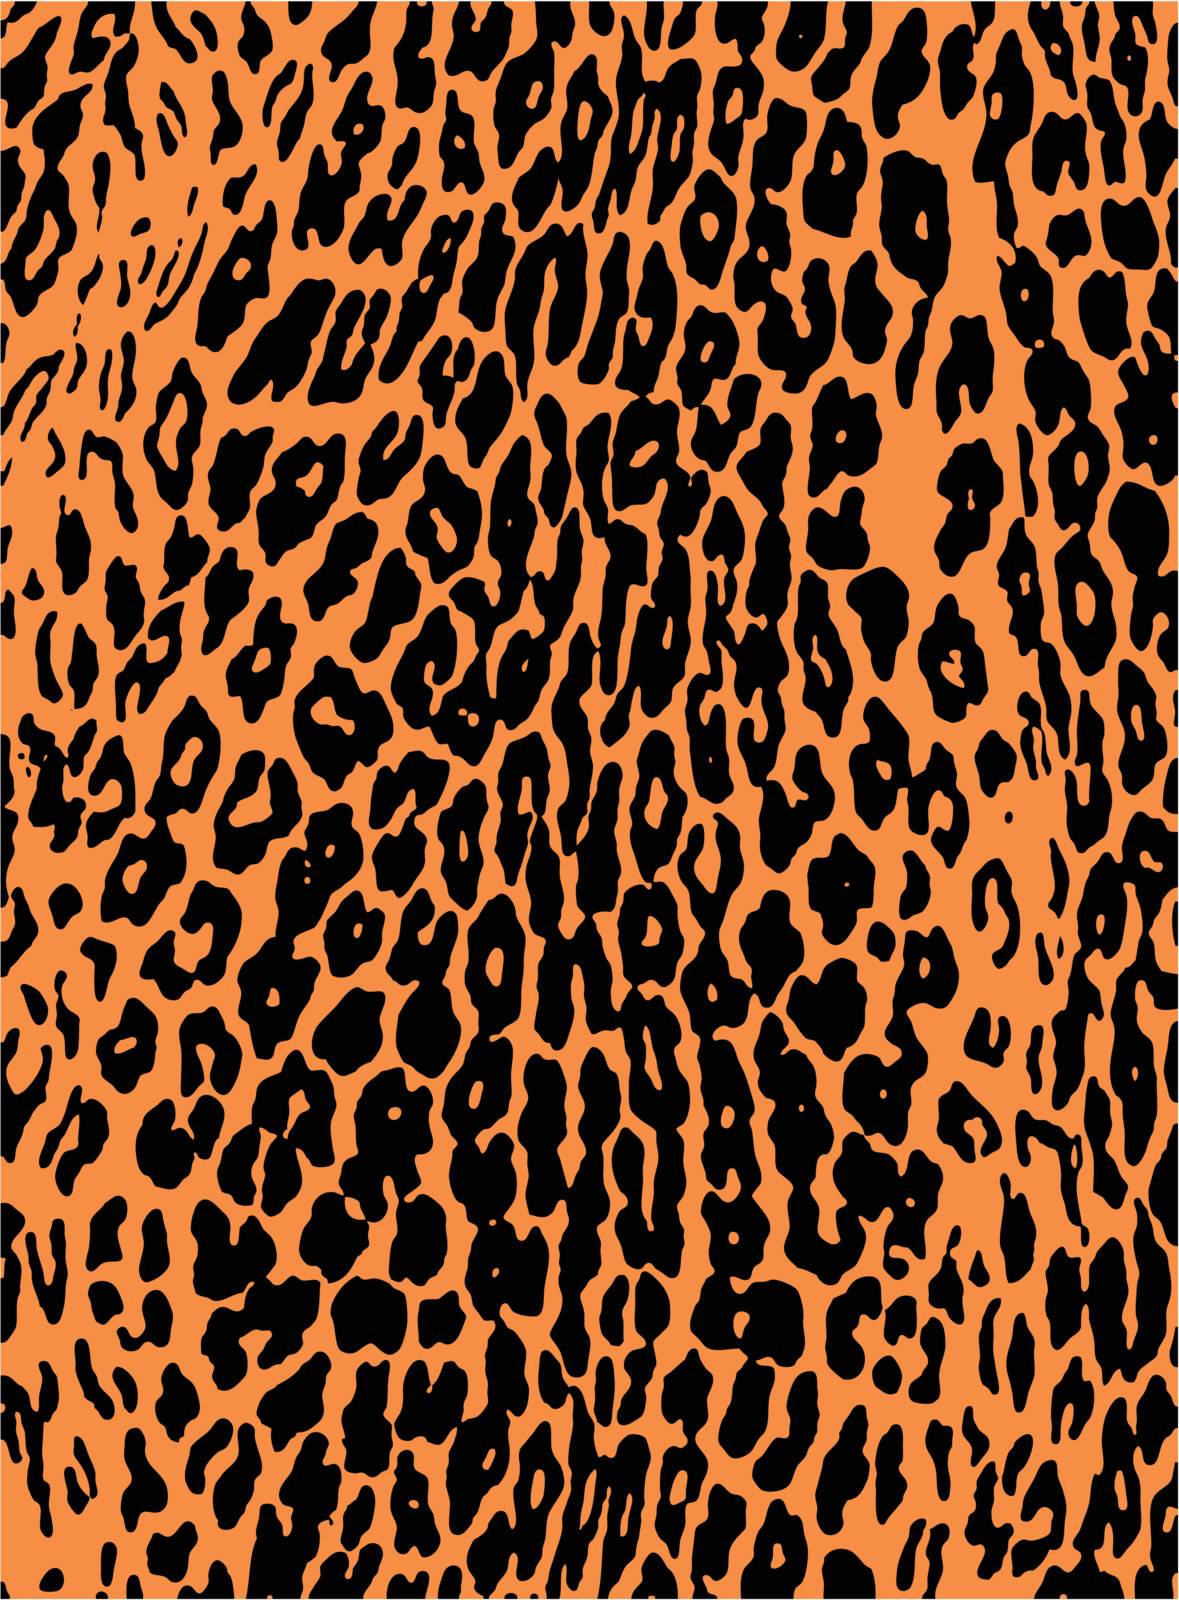 animal skin pattern by pauljune